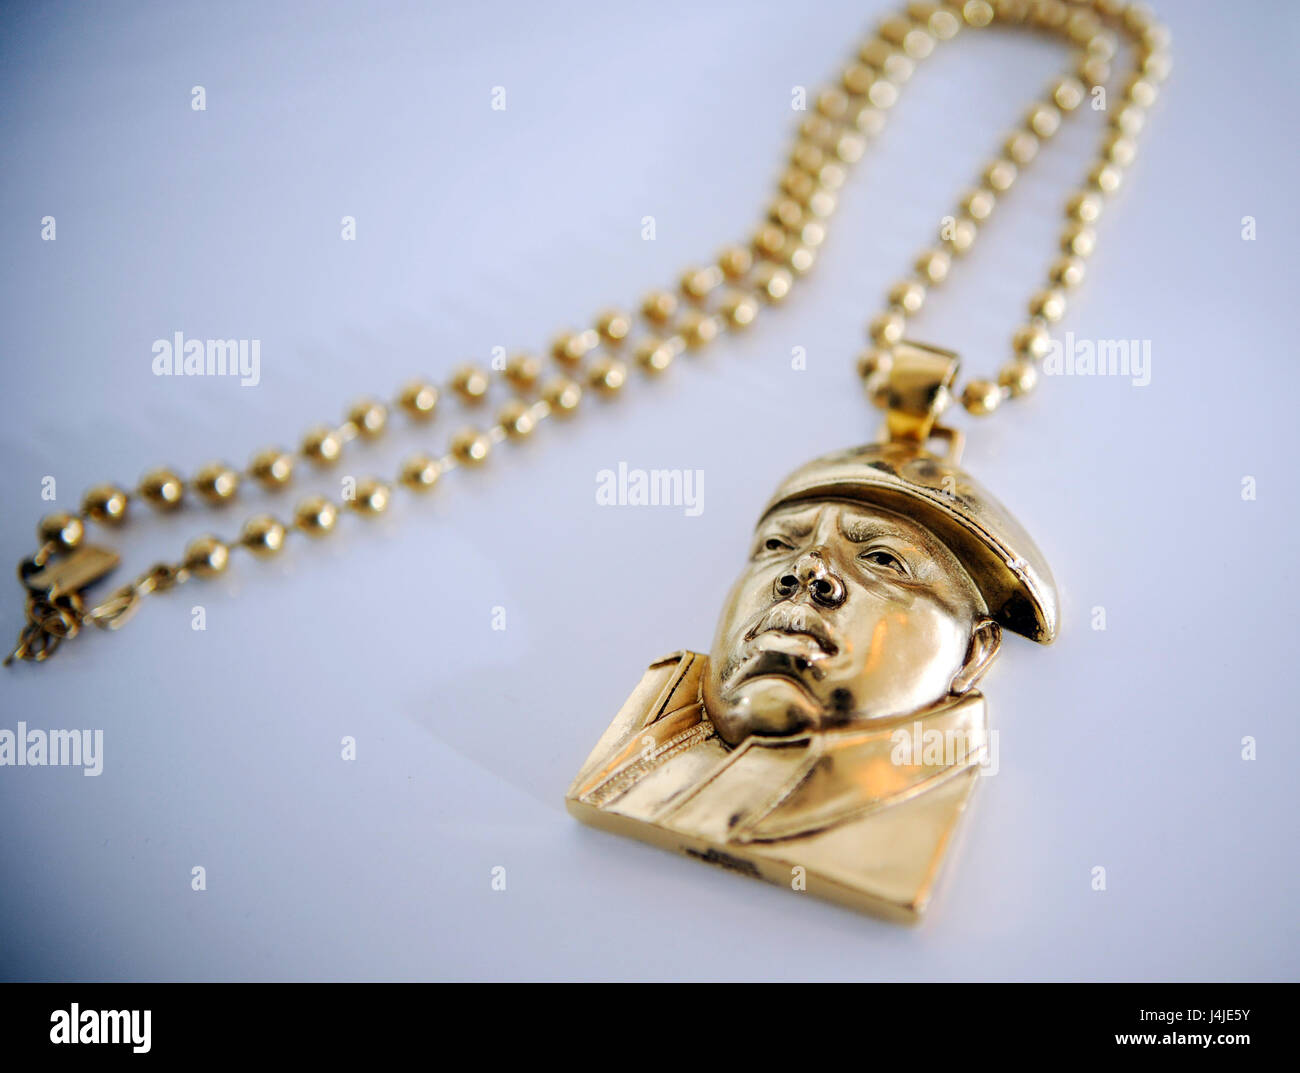 rapper-the-notorious-big-aka-biggie-smalls-gold-chain-face-on-set-J4JE5Y.jpg